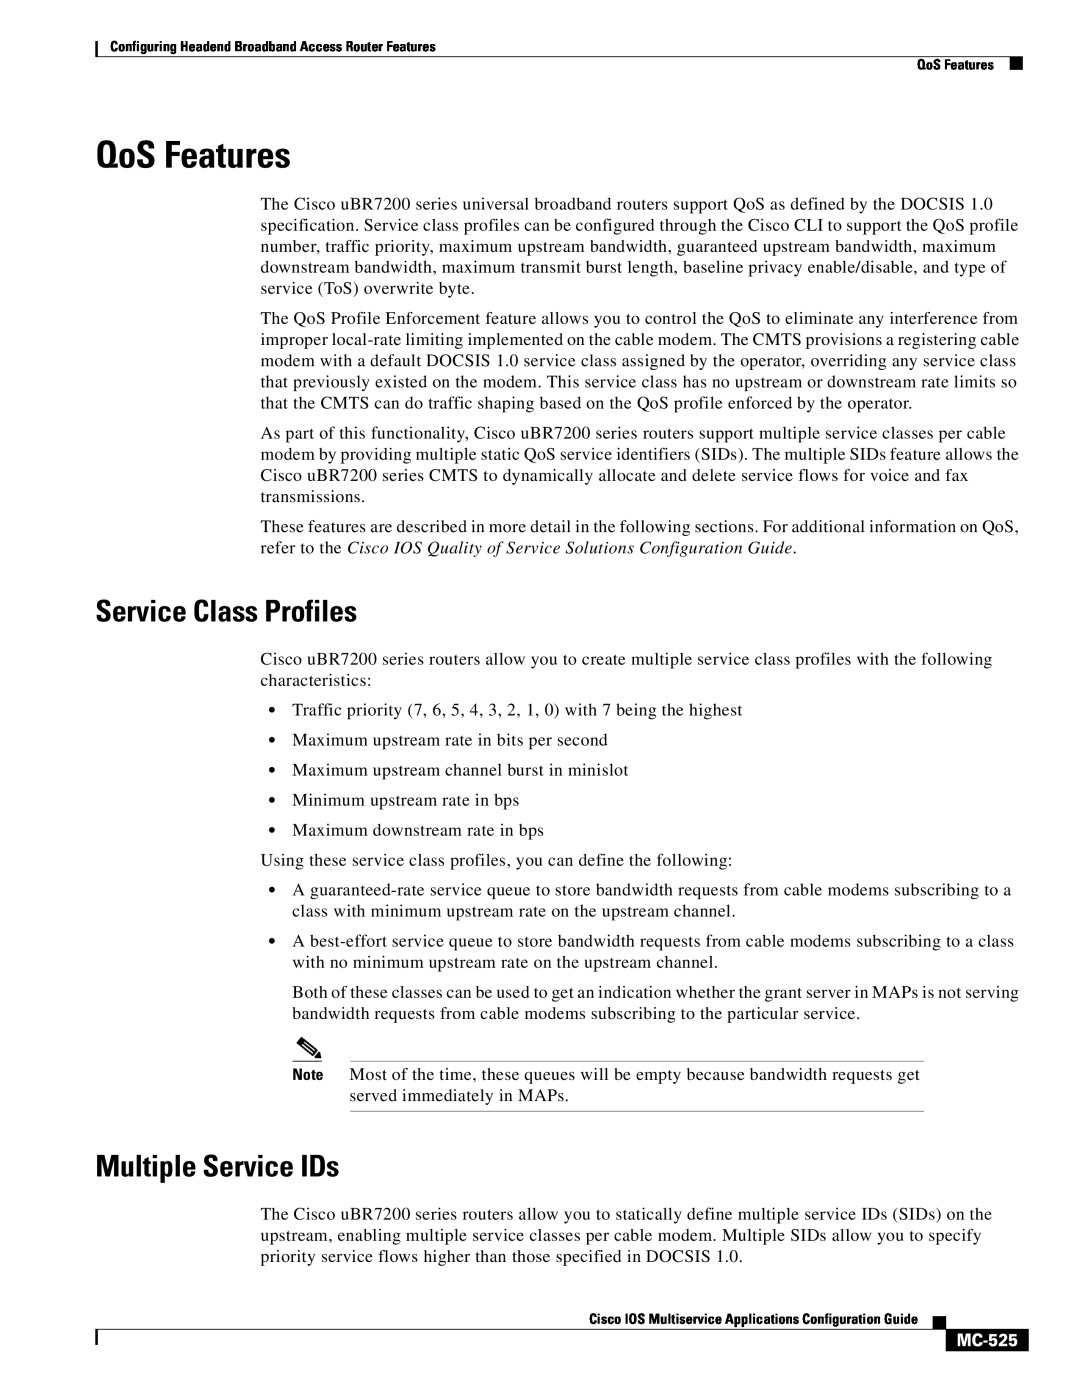 Cisco Systems uBR7200 manual QoS Features, Service Class Profiles, Multiple Service IDs, MC-525 